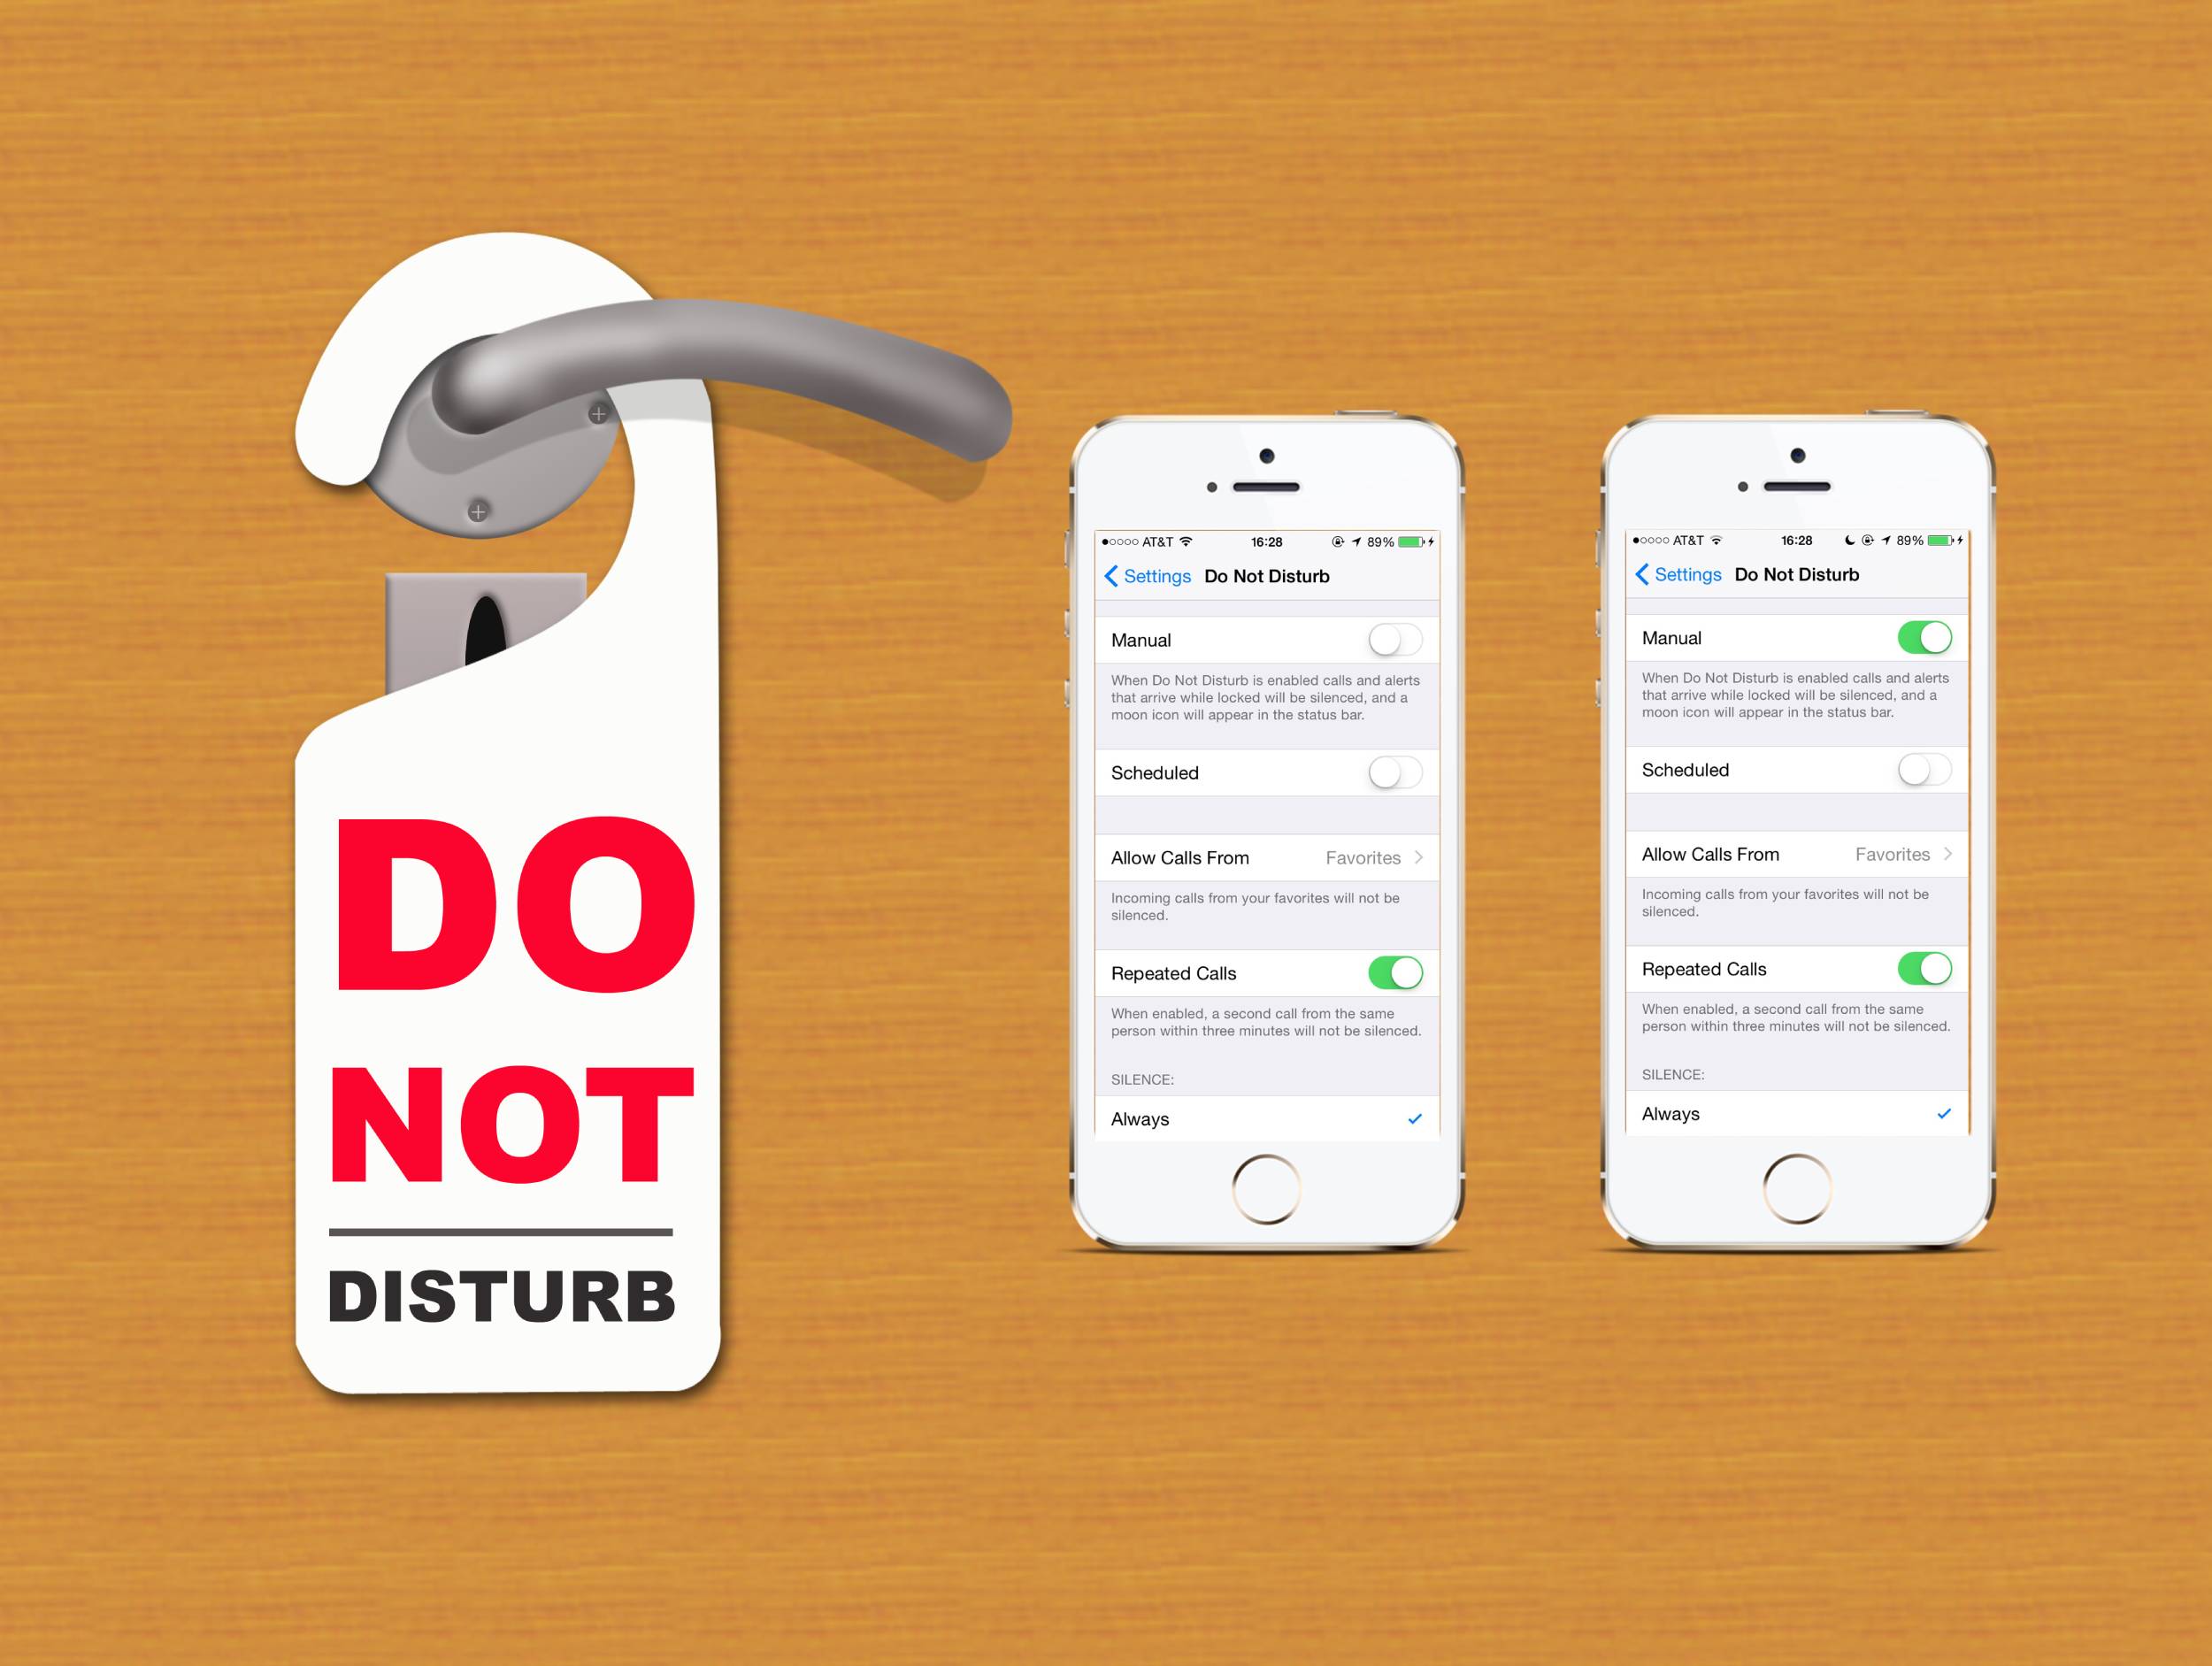 do not disturb iphone not working